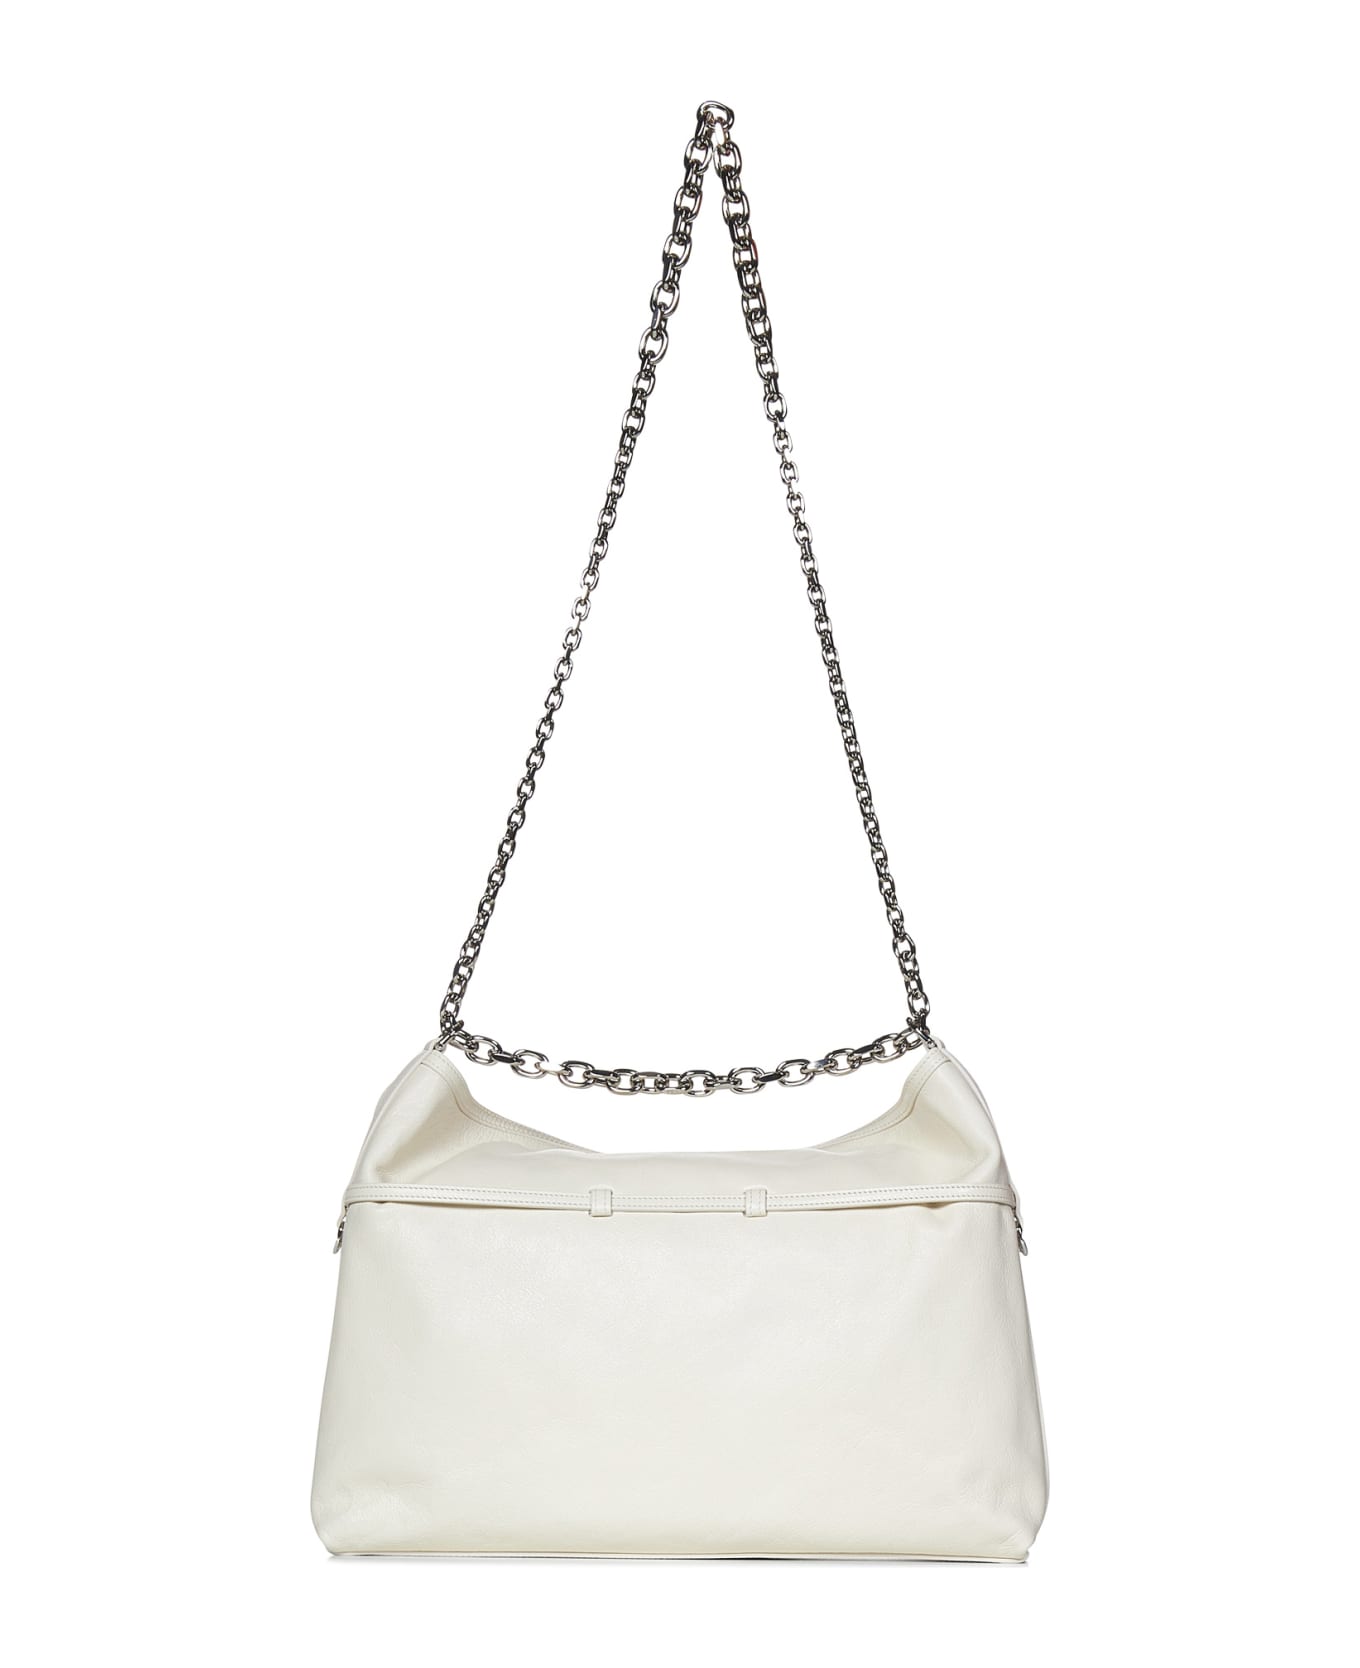 Givenchy Voyou Chain Shoulder Bag - White トートバッグ